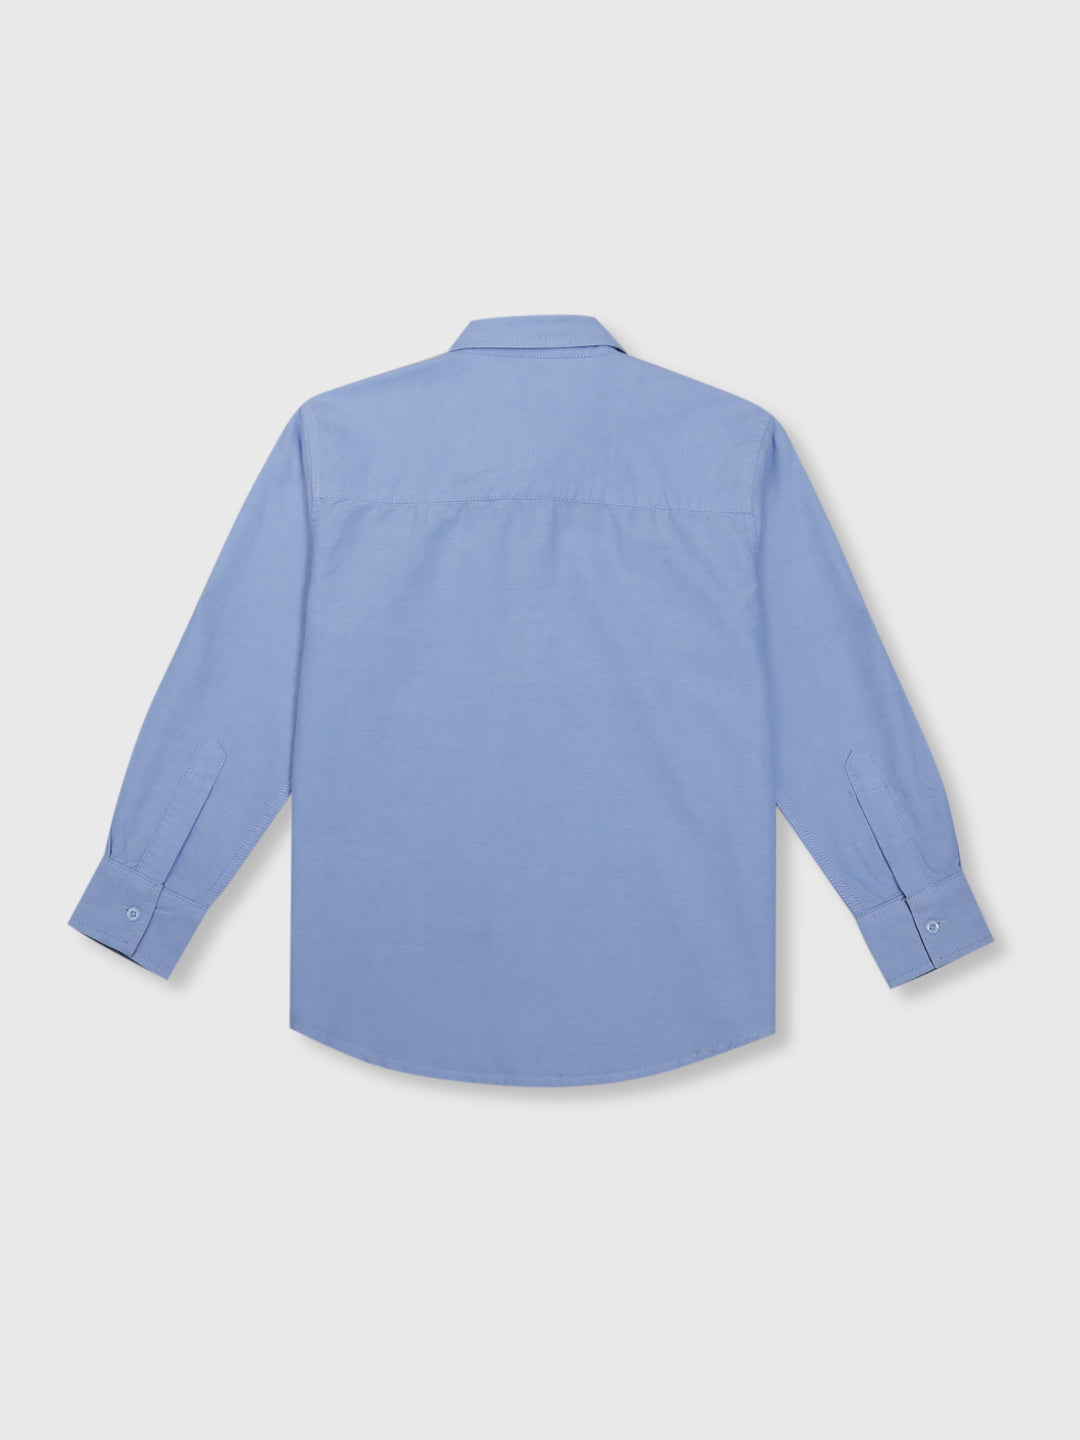 Boys Blue Solid Cotton Shirt